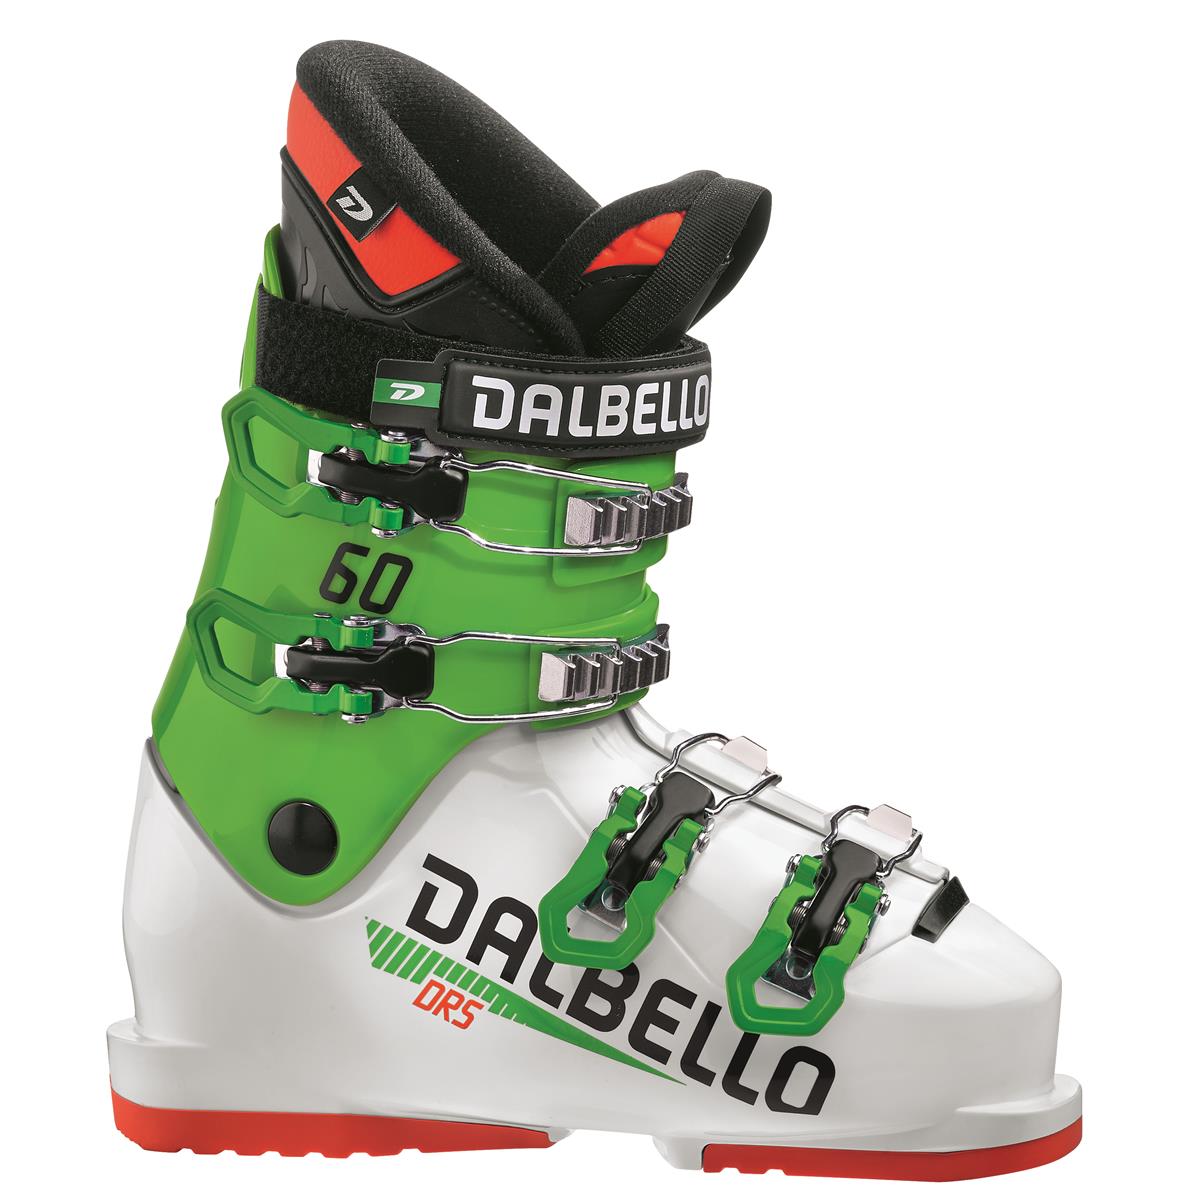 102403 DALBELLO DRS 60 JR Kinder Skischuhe Saison 2019/20 